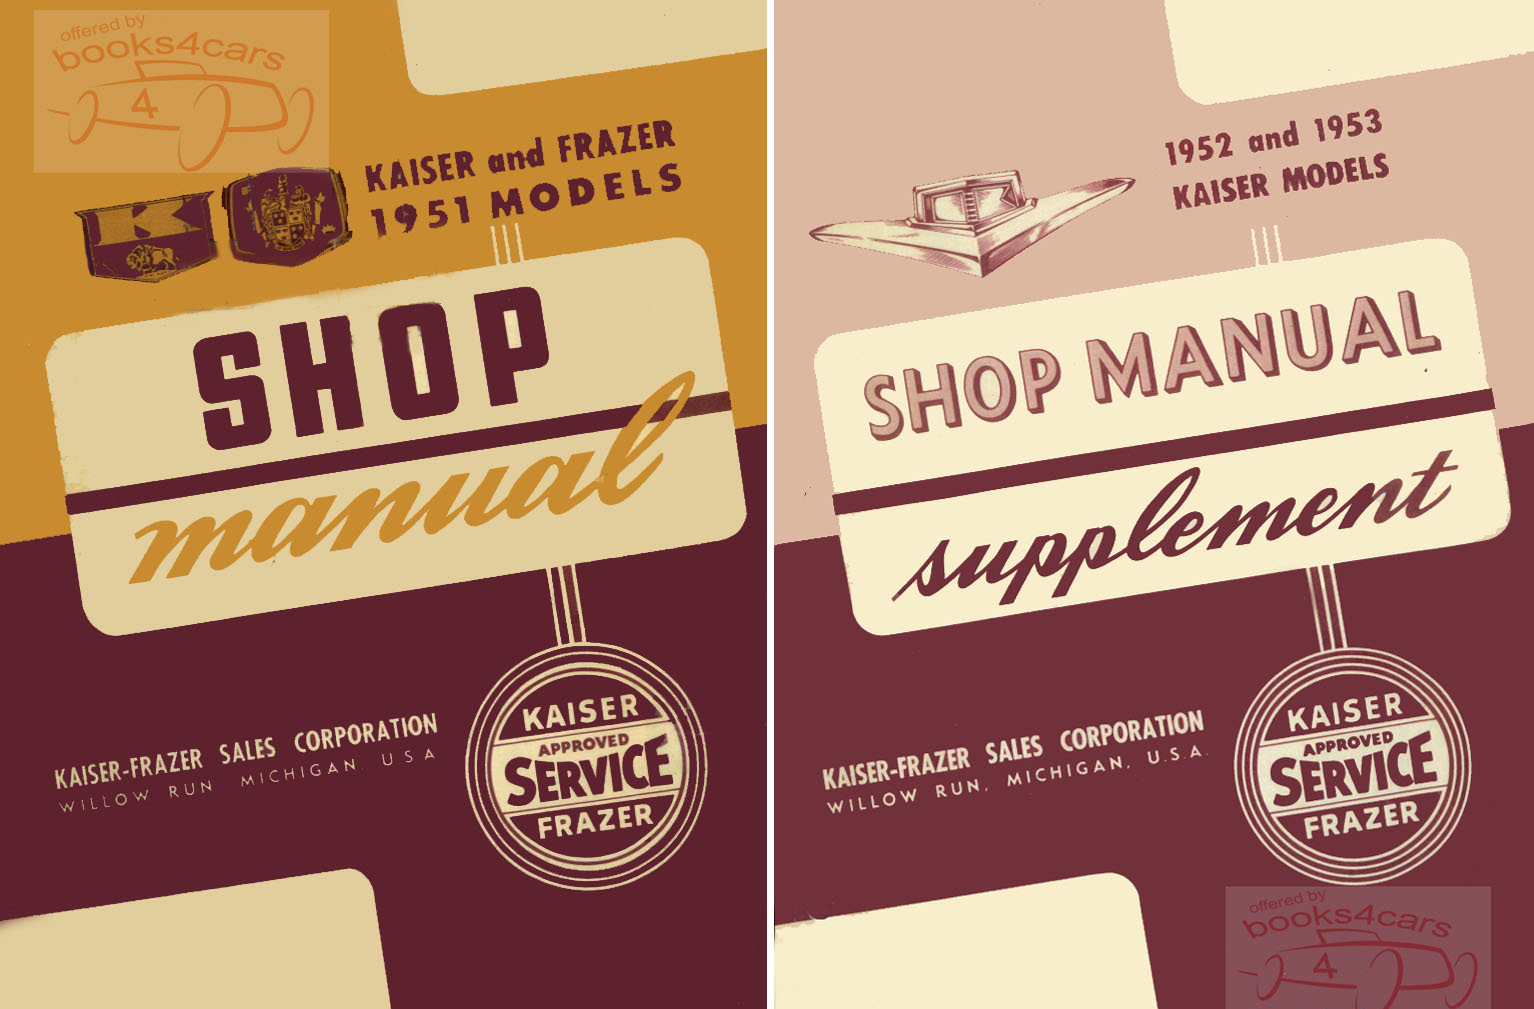 51-53 Shop Service Repair Manual by Kaiser Frazer